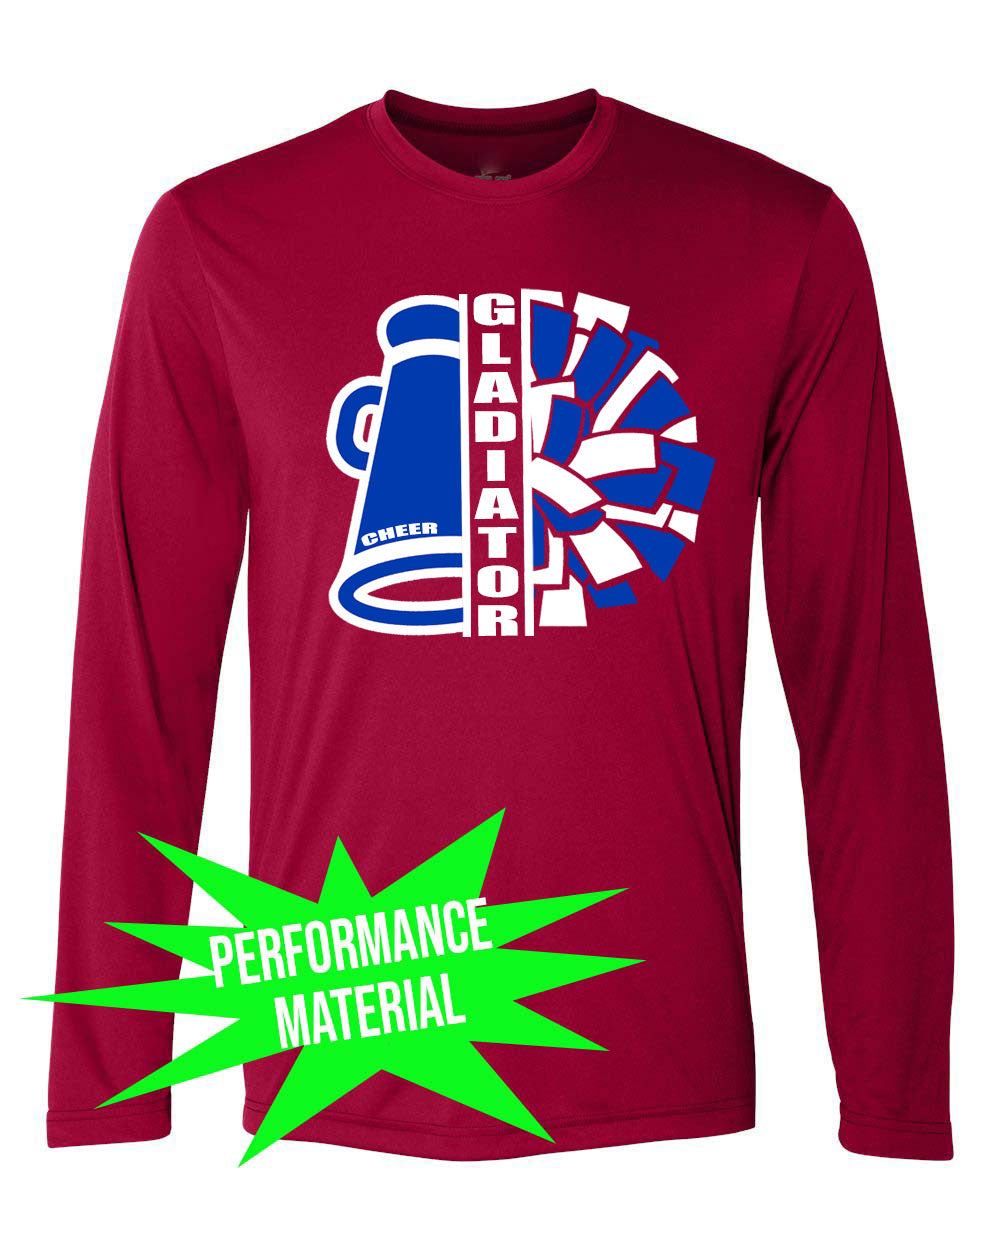 Goshen Cheer Performance Material Design 10 Long Sleeve Shirt